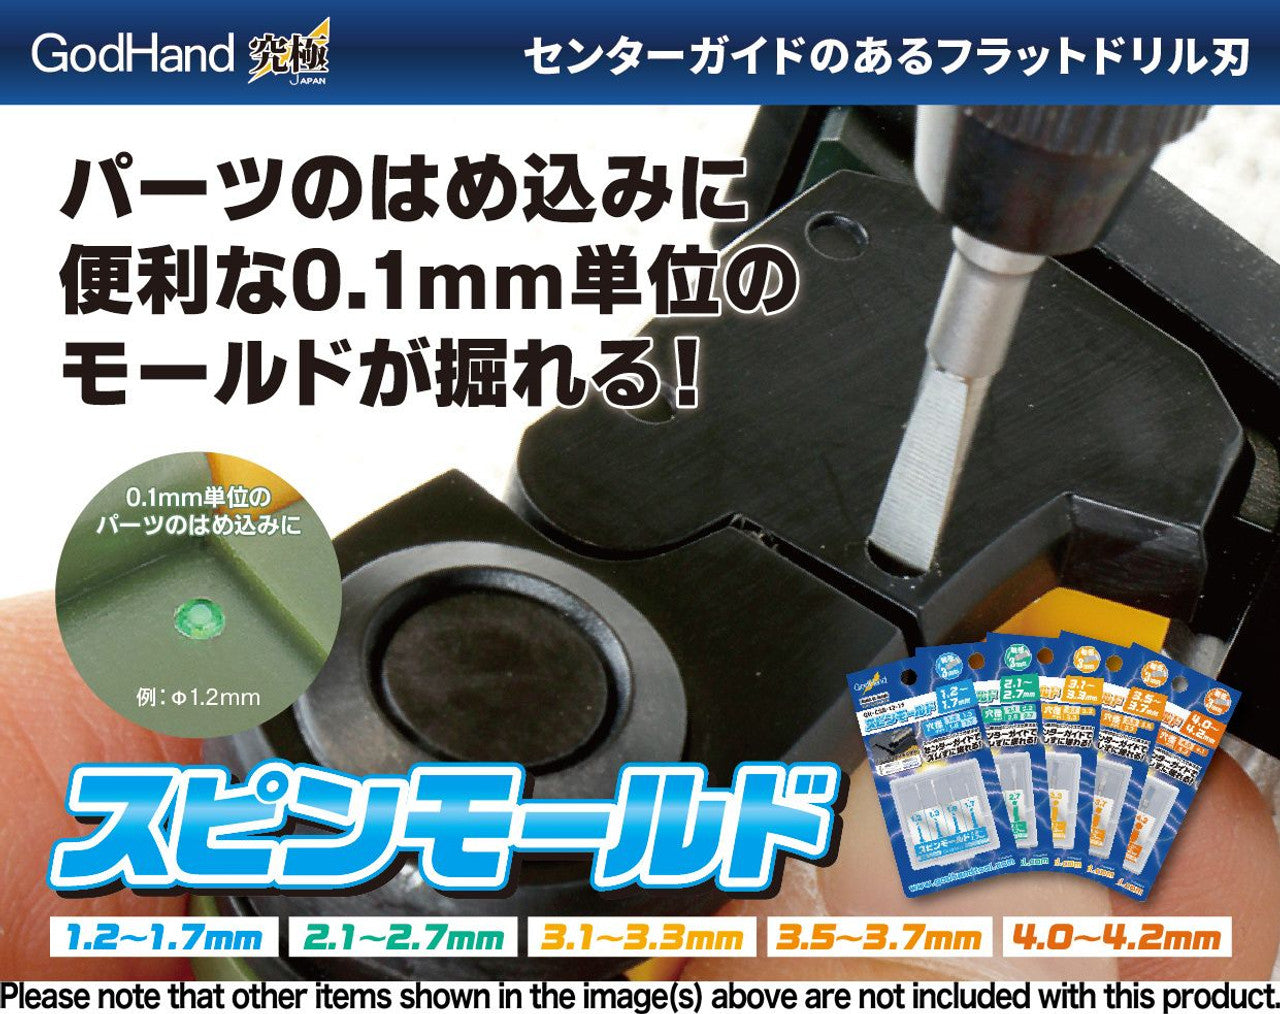 God Hand GH-CSB-12-17 Spin Mold 1.2 - 1.7mm - BanzaiHobby